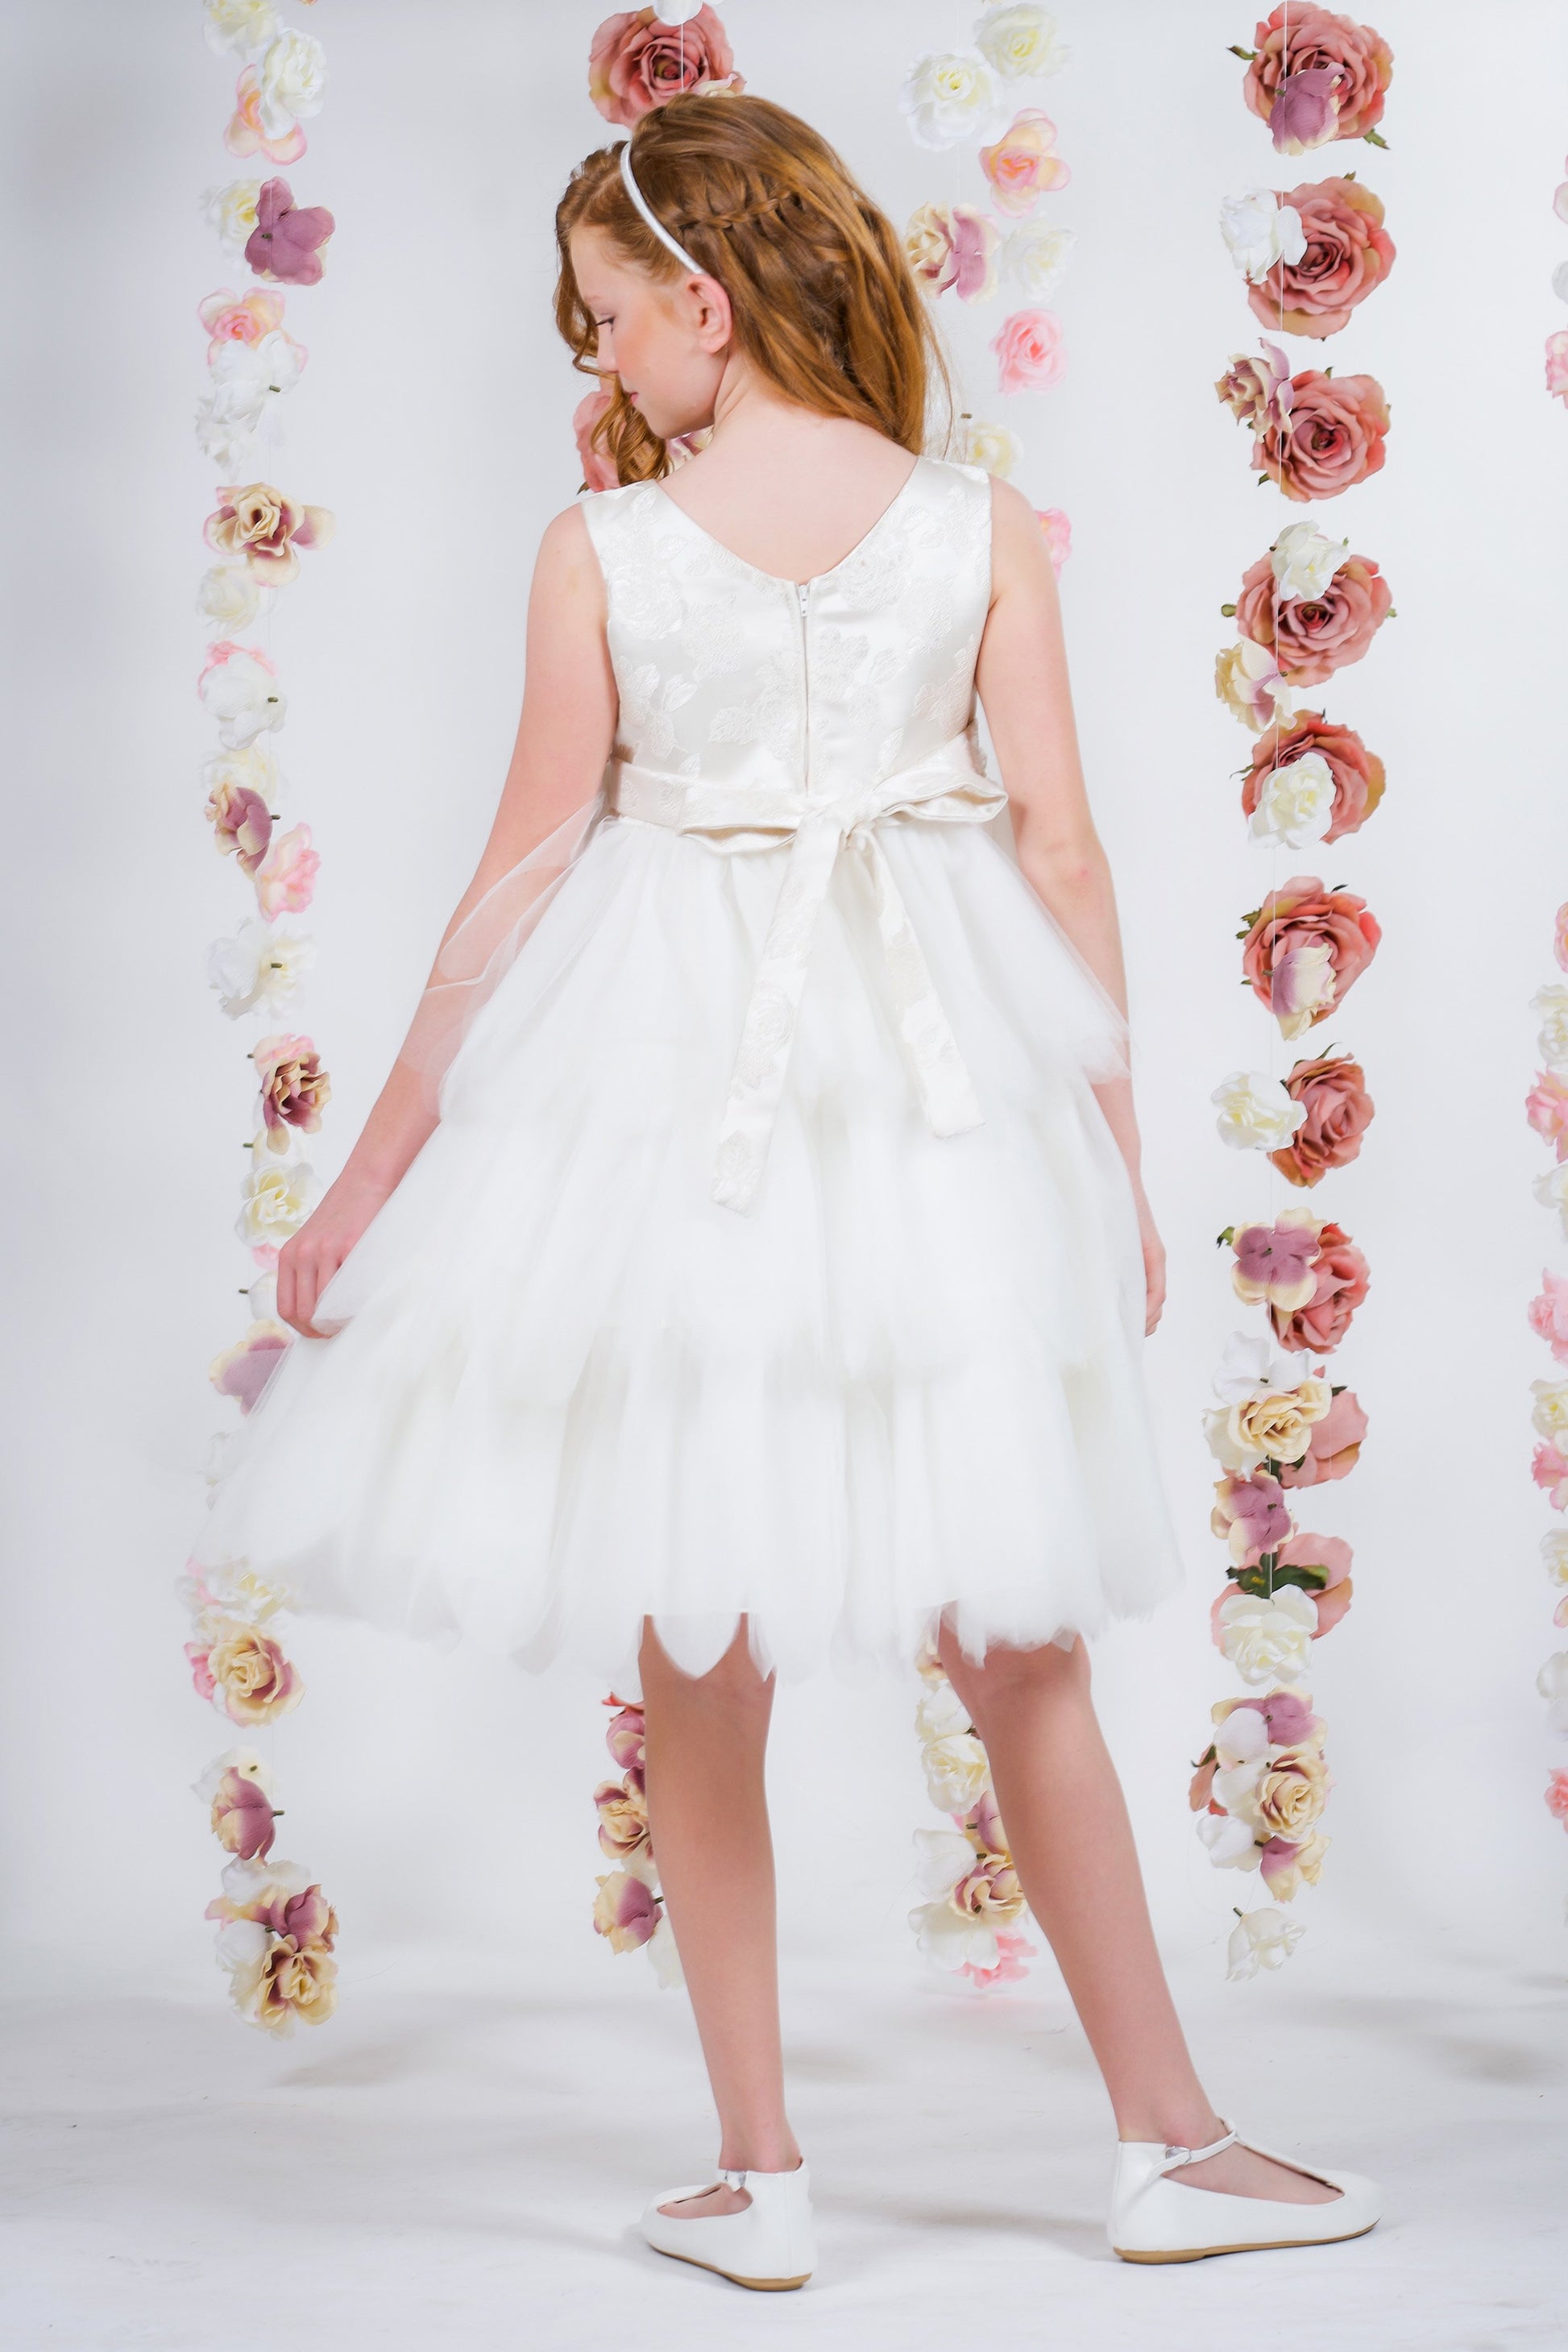 Dress - Rose Brocade 10 Layer Illusion Dress